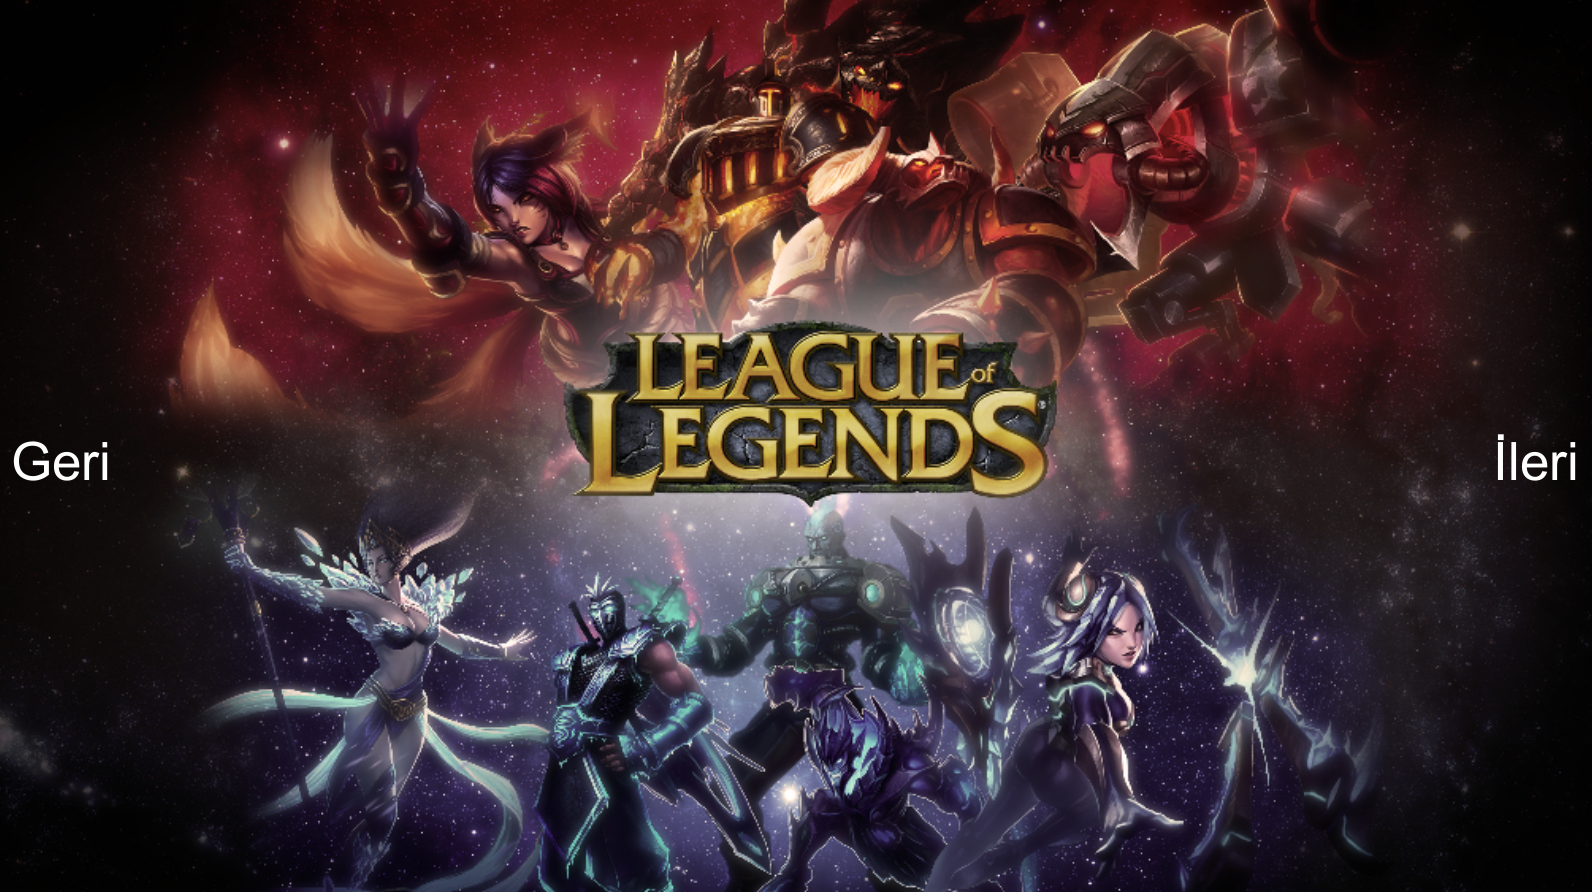 League of Legends Wallpaper HD APK Download - Free Media & Video ...